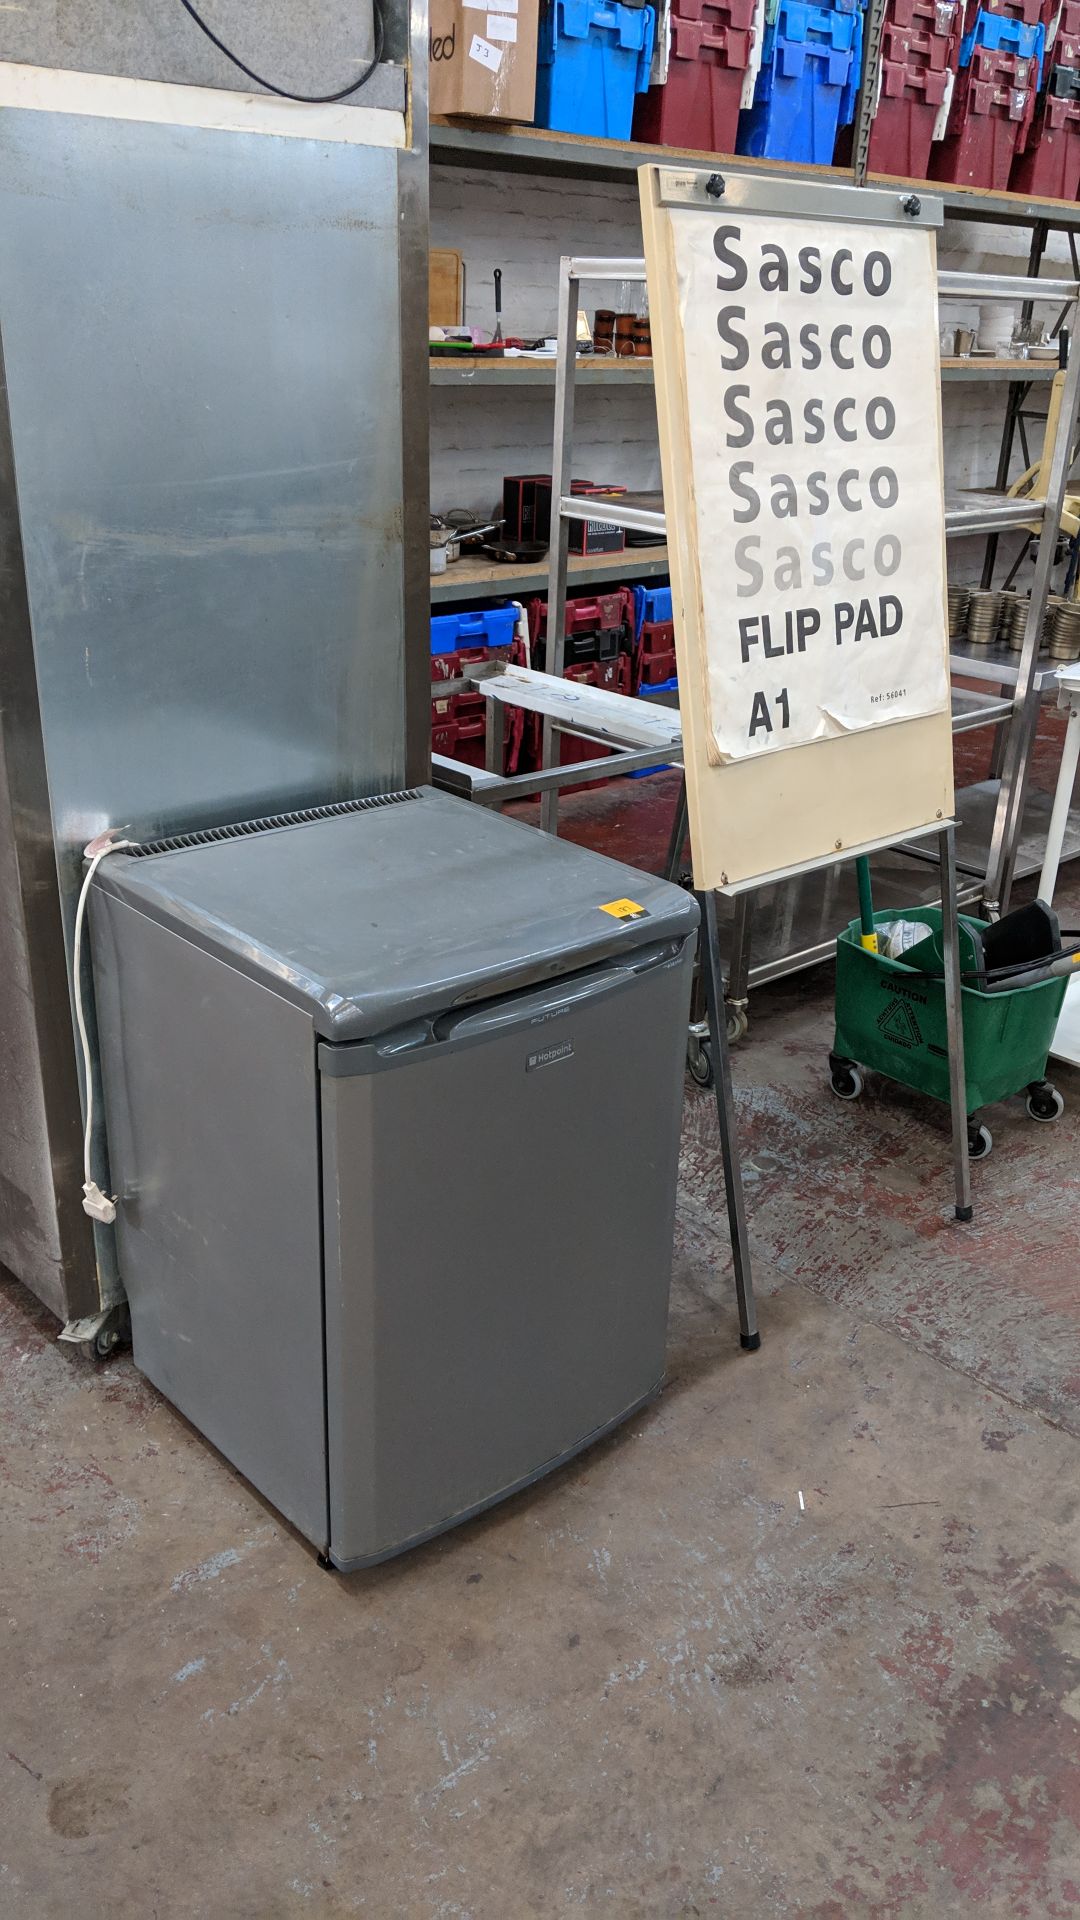 Hotpoint Future counter height fridge plus Sasco flipchart holder including padLots 187 – 189 and